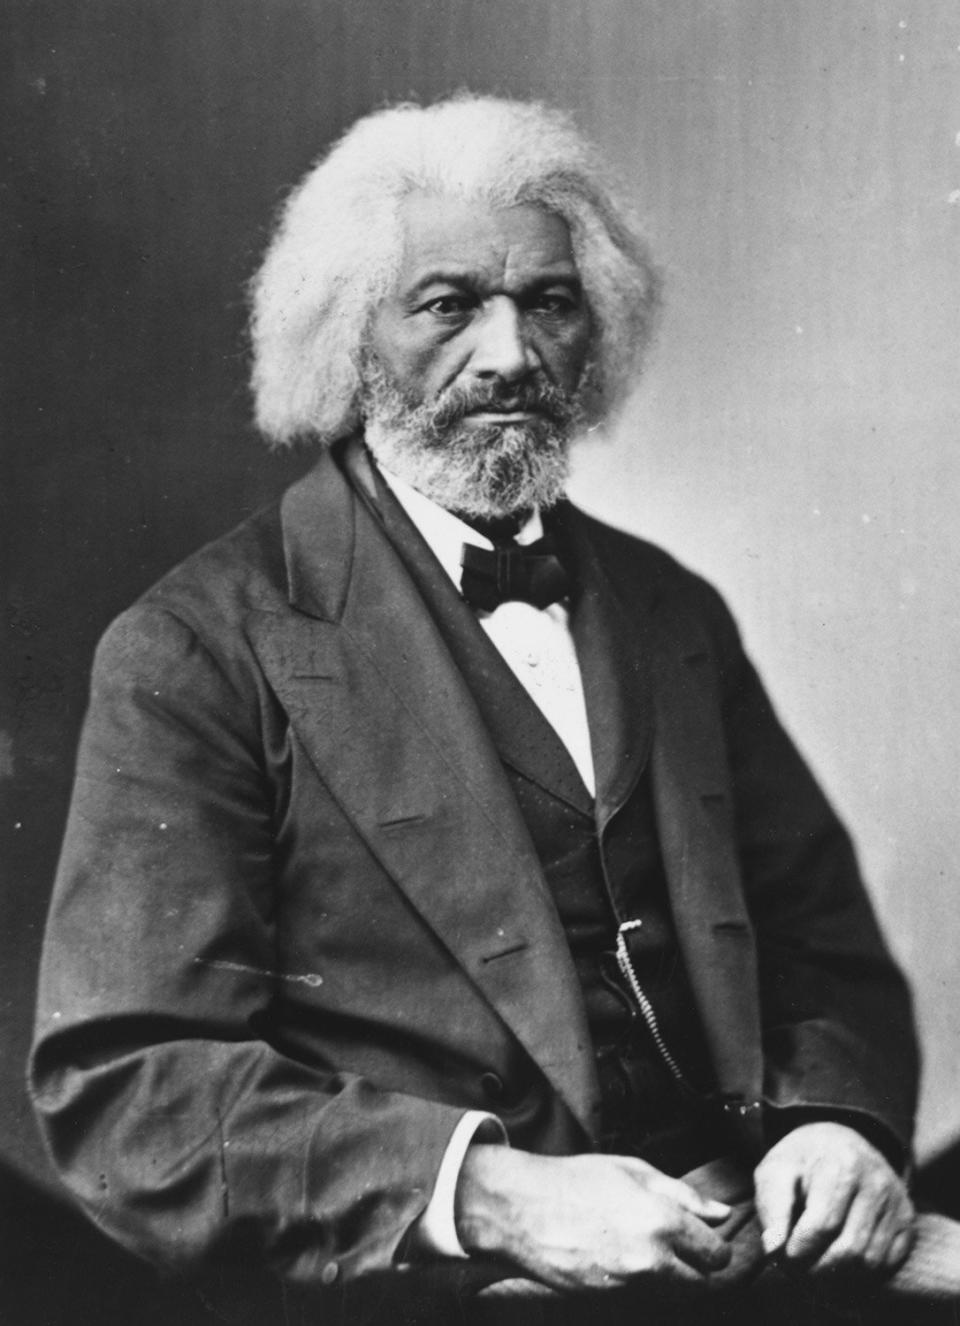 Feb. 14, 1818: The Day the U.S. Observes Frederick Douglass’ Birthday